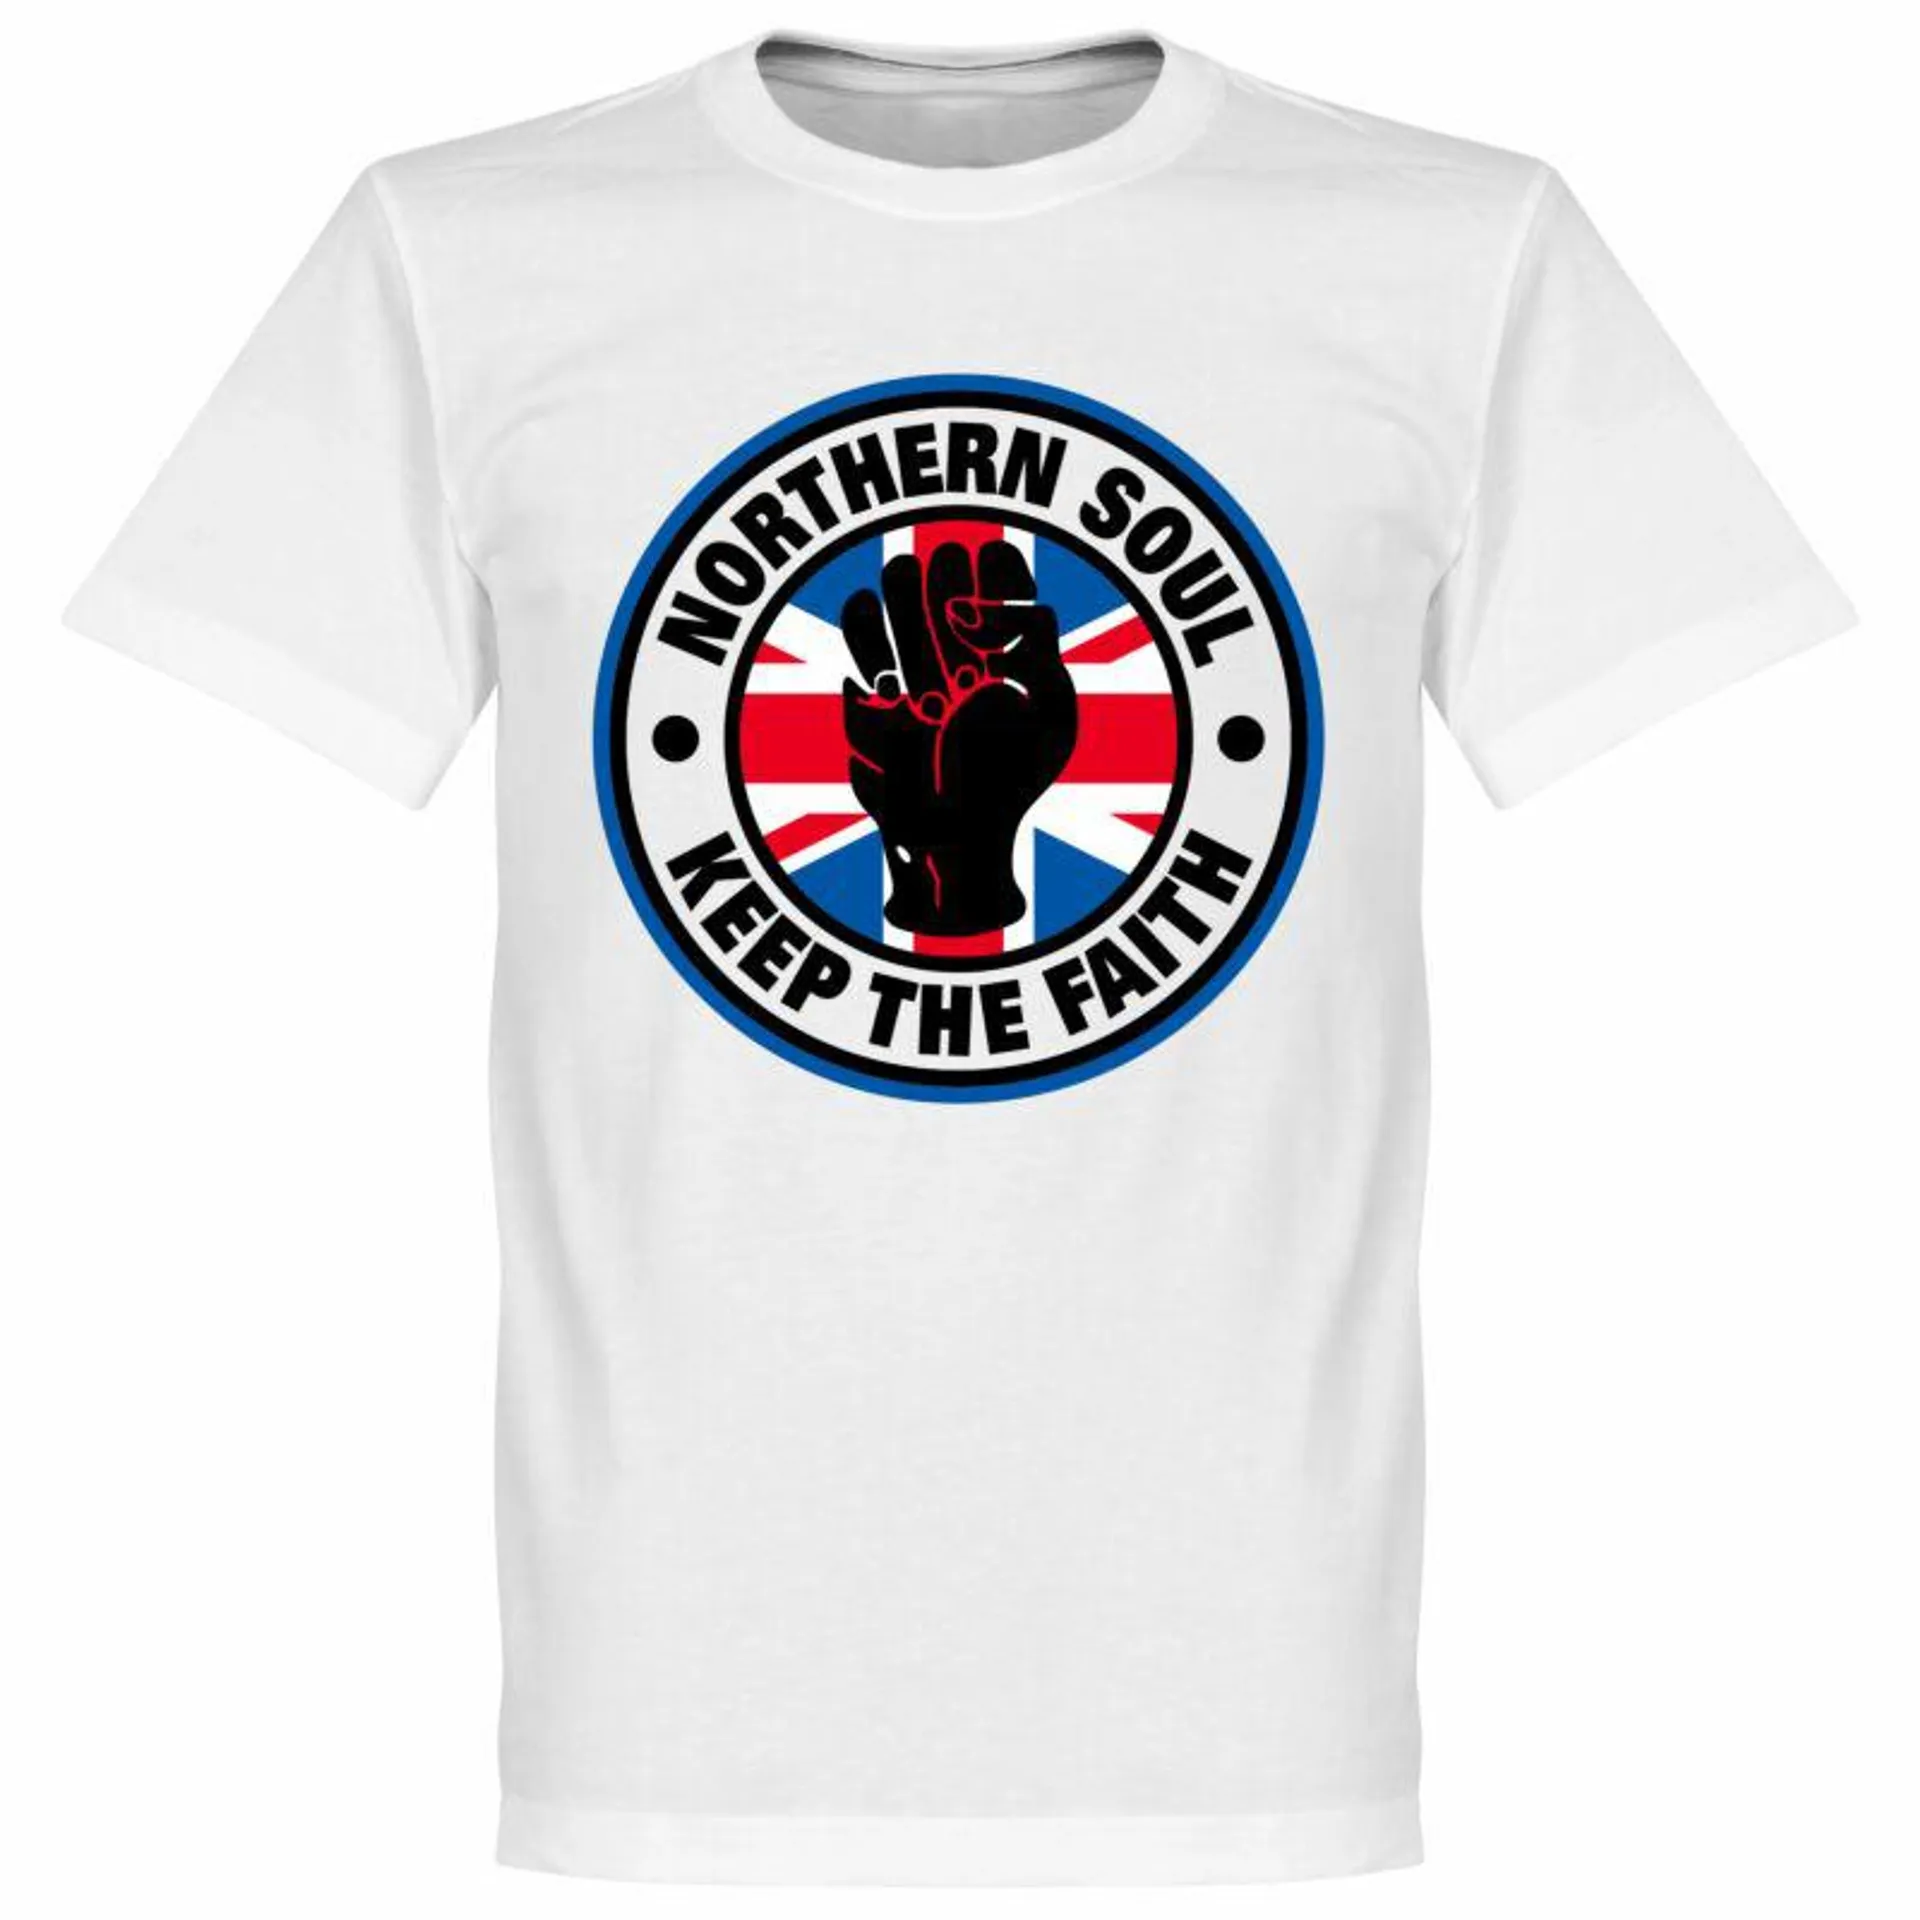 Northern Soul Union Flag T-Shirt - White